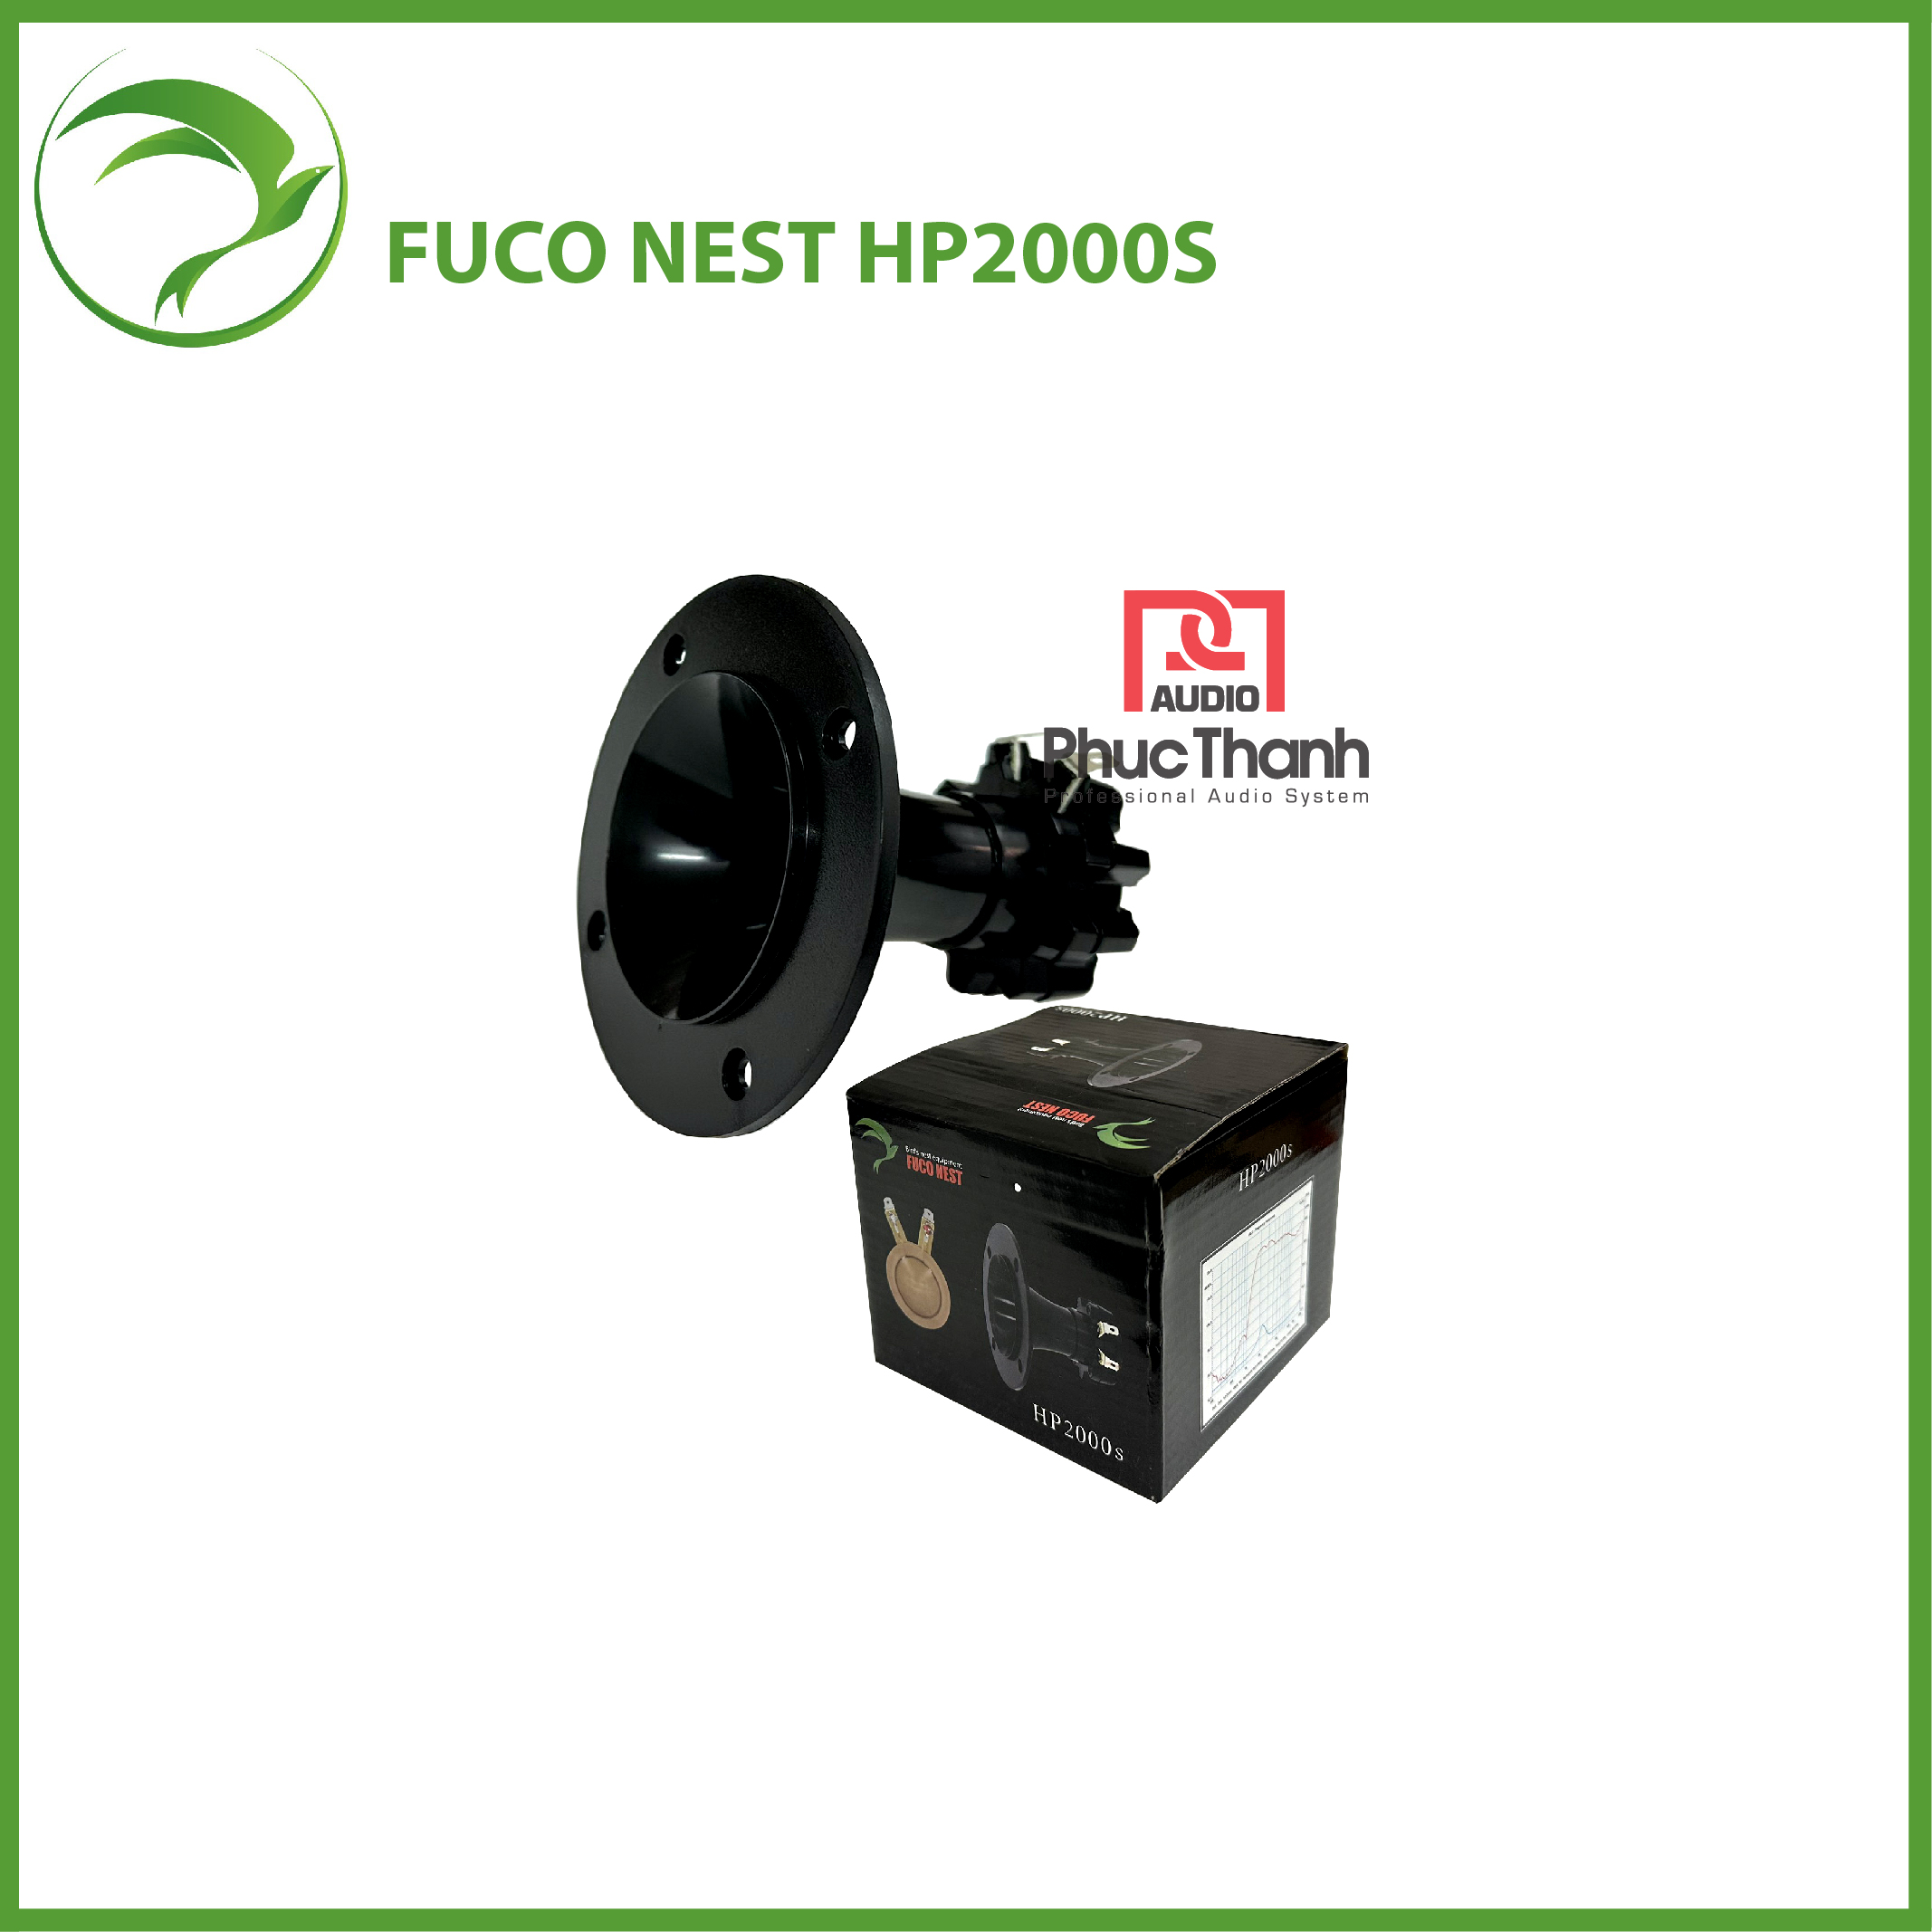 Loa Fuco Nest HP2000S